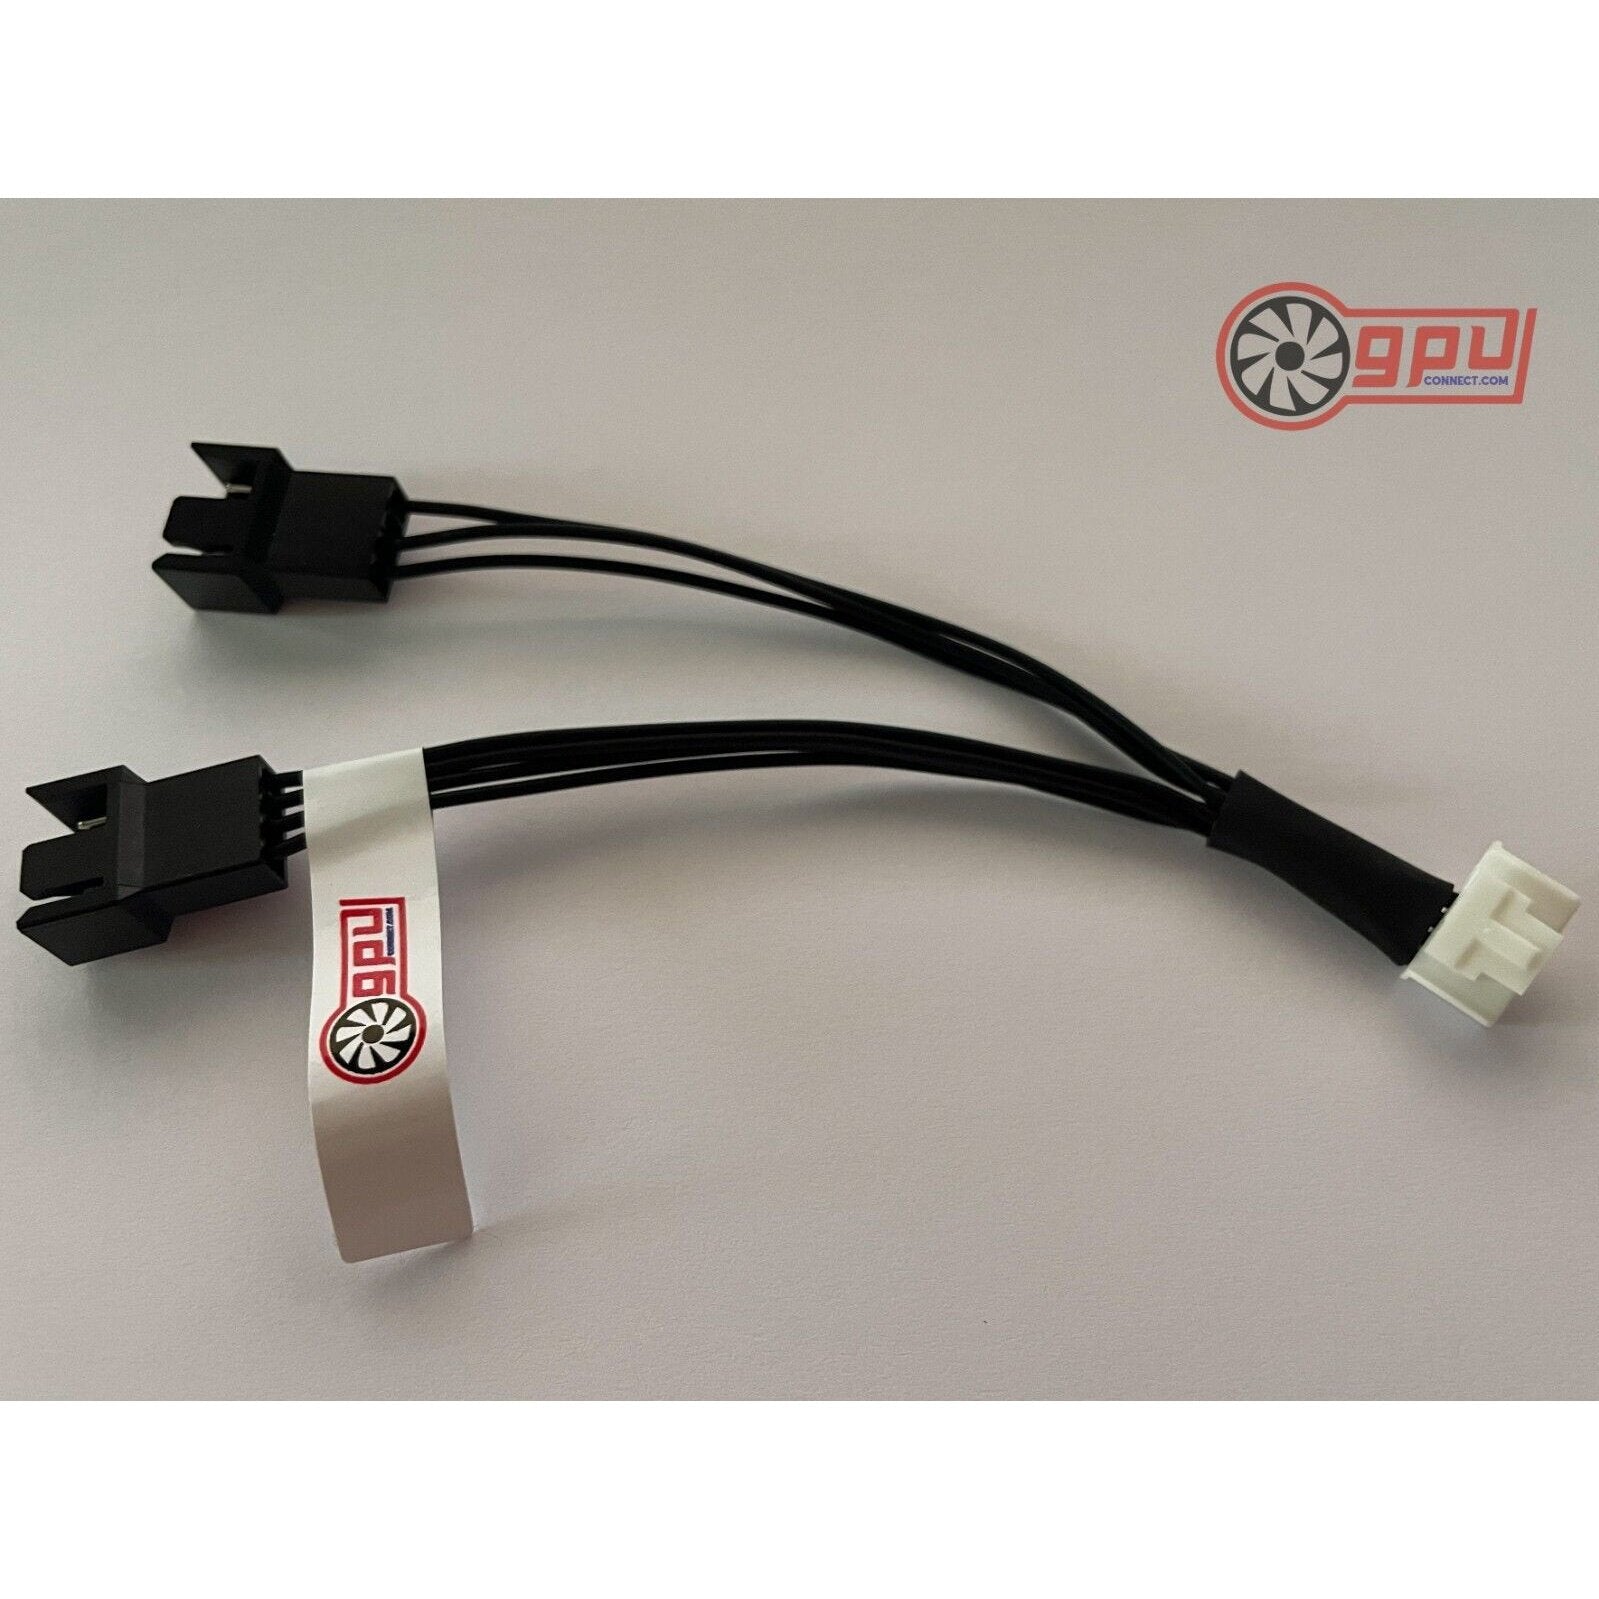 ASUS RTX 2070 2060 / GTX 1660 DUAL Mini - 6 PIN PWM Fan Deshroud Adapter Cable - GPUCONNECT.COM